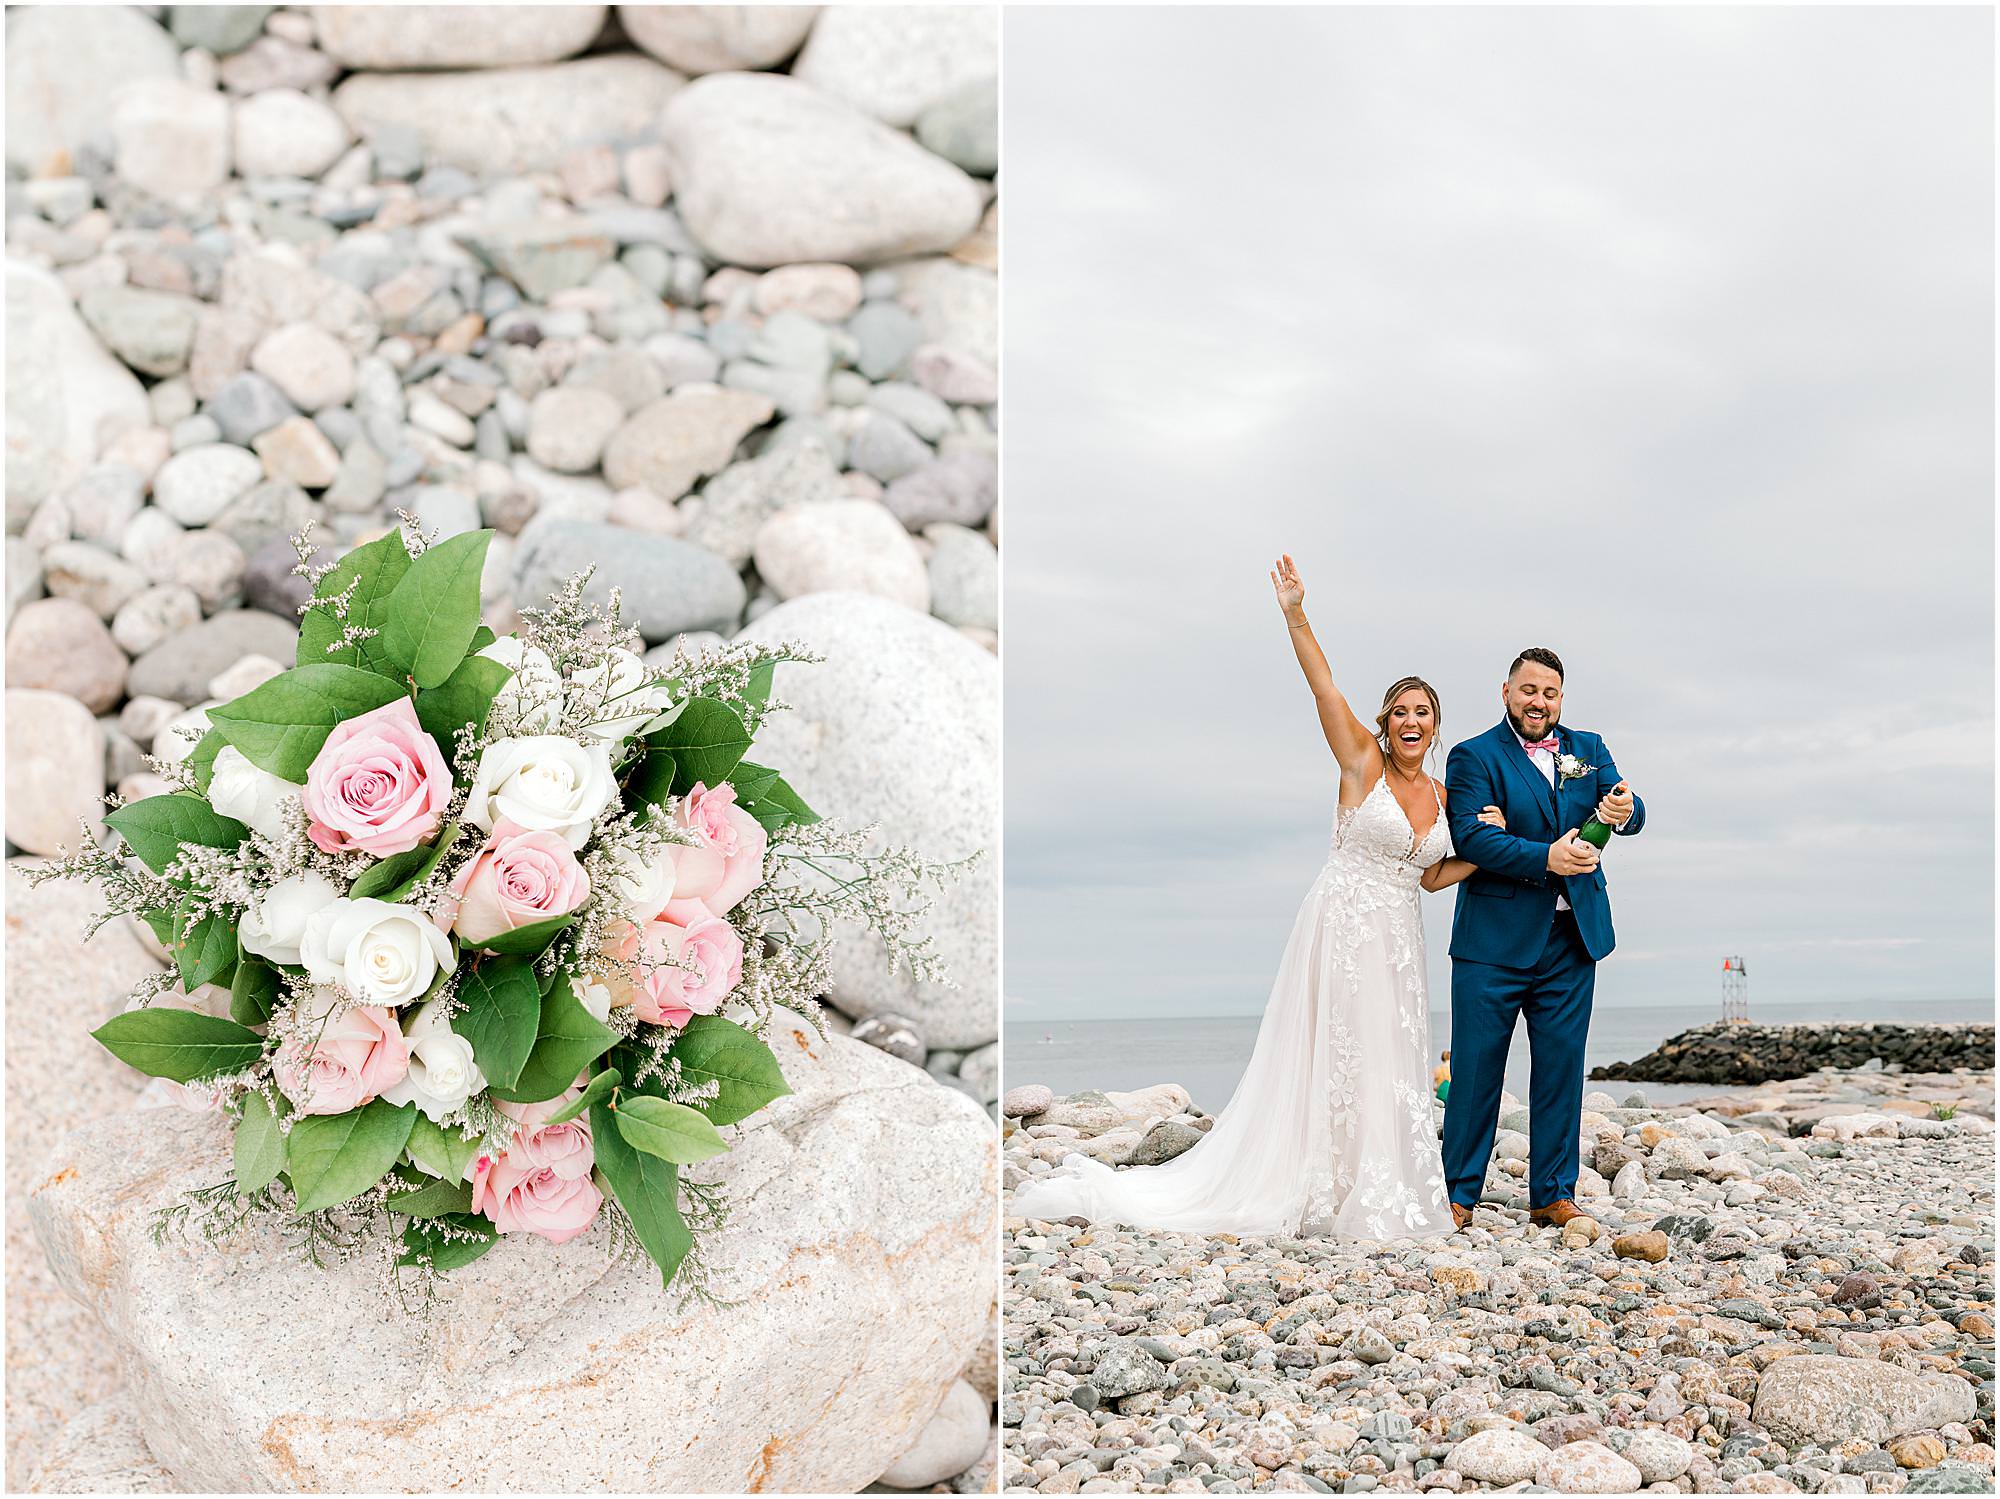 scituate lighthouse wedding photos